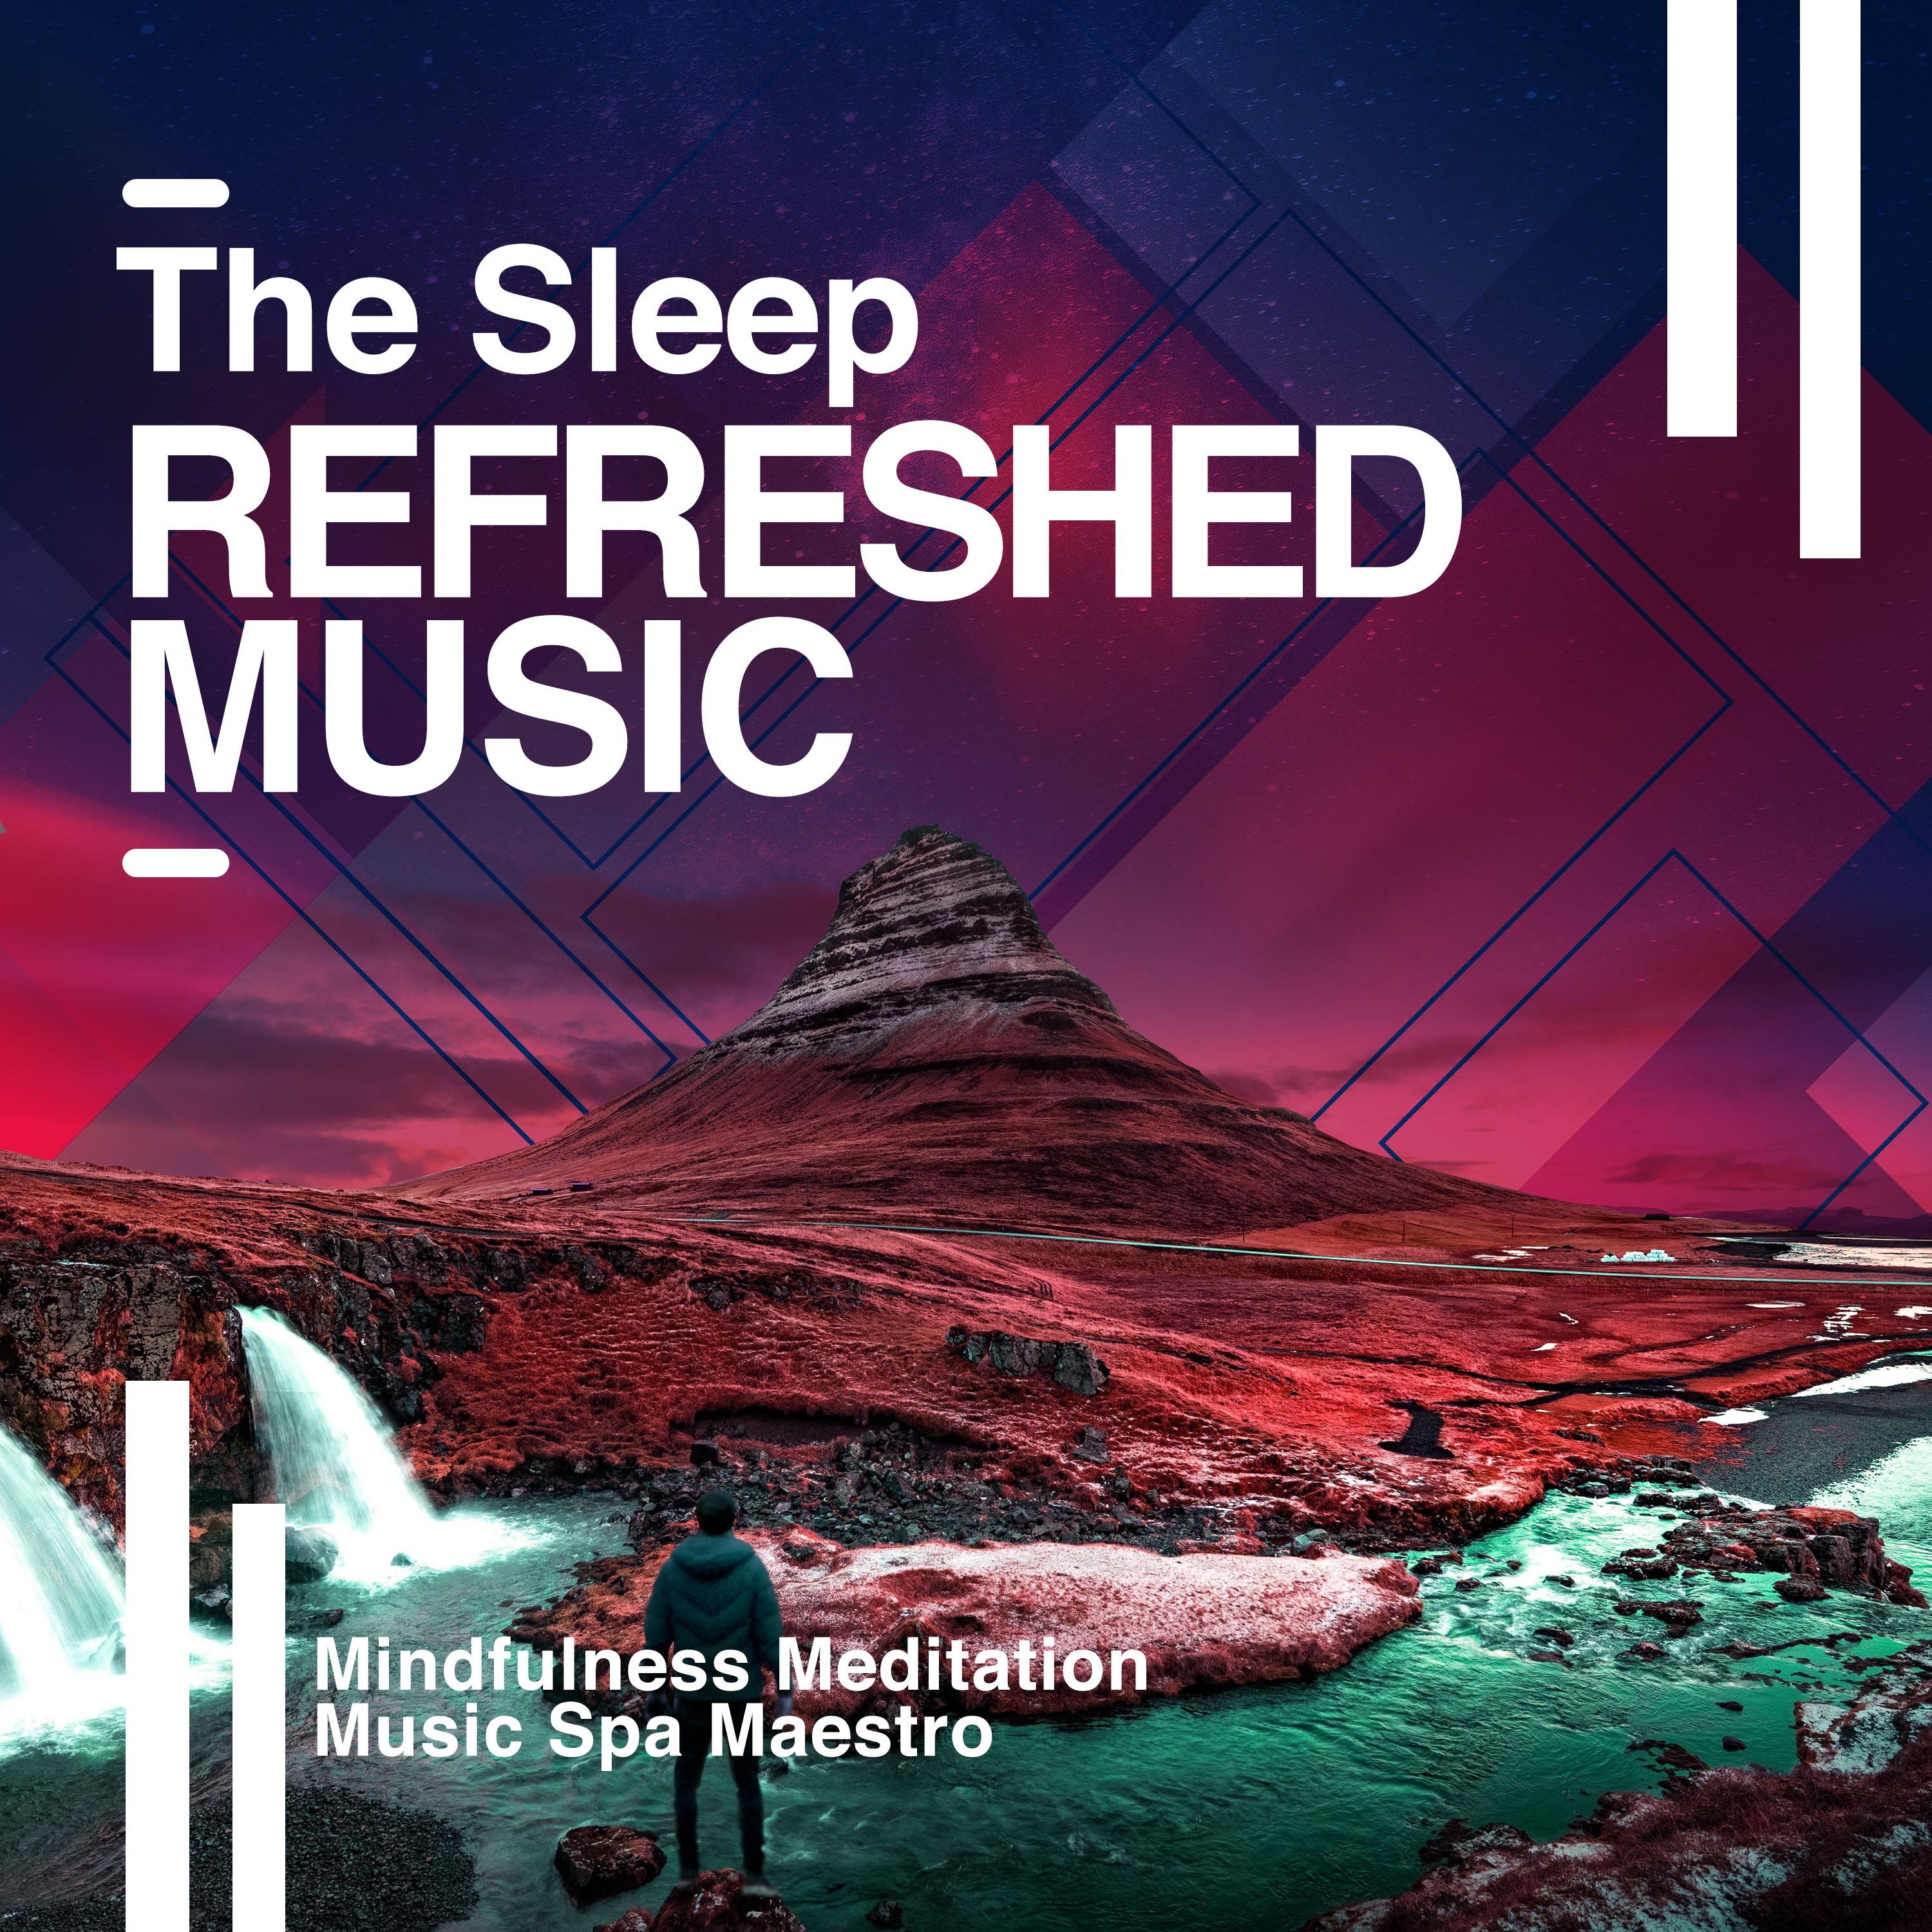 The Sleep Refreshed Music